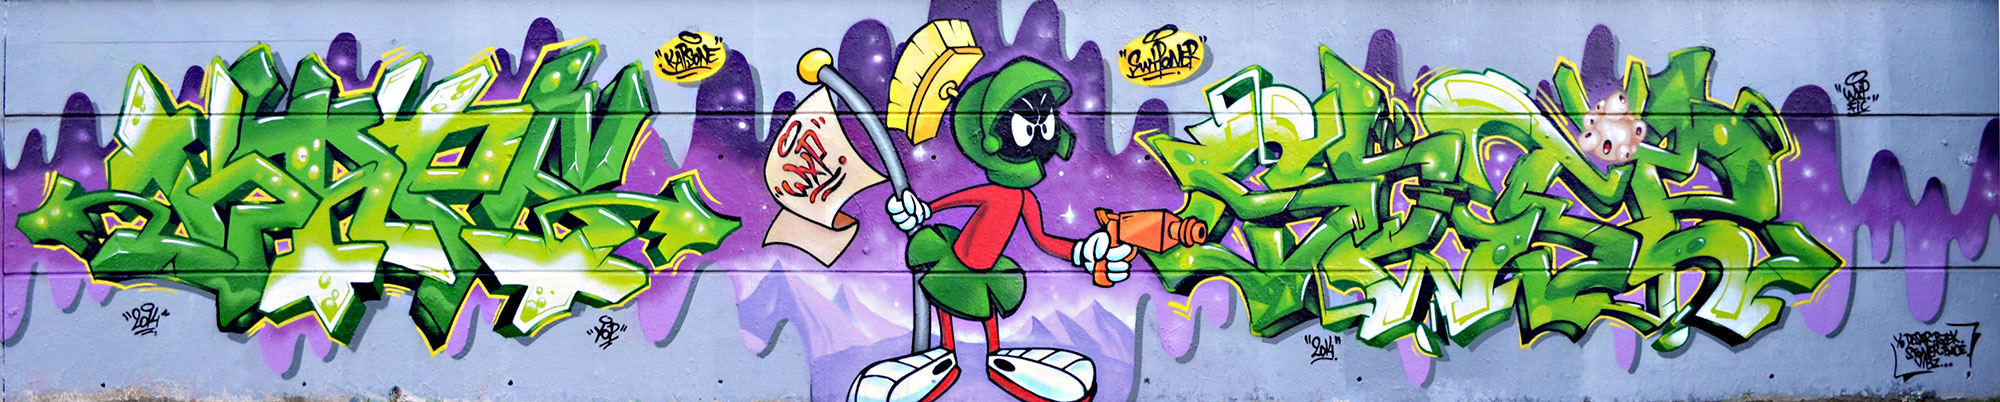 tex-avery-graffiti-swip-swiponer-deco-graff-toulouse-wxp-ramonville-fresque